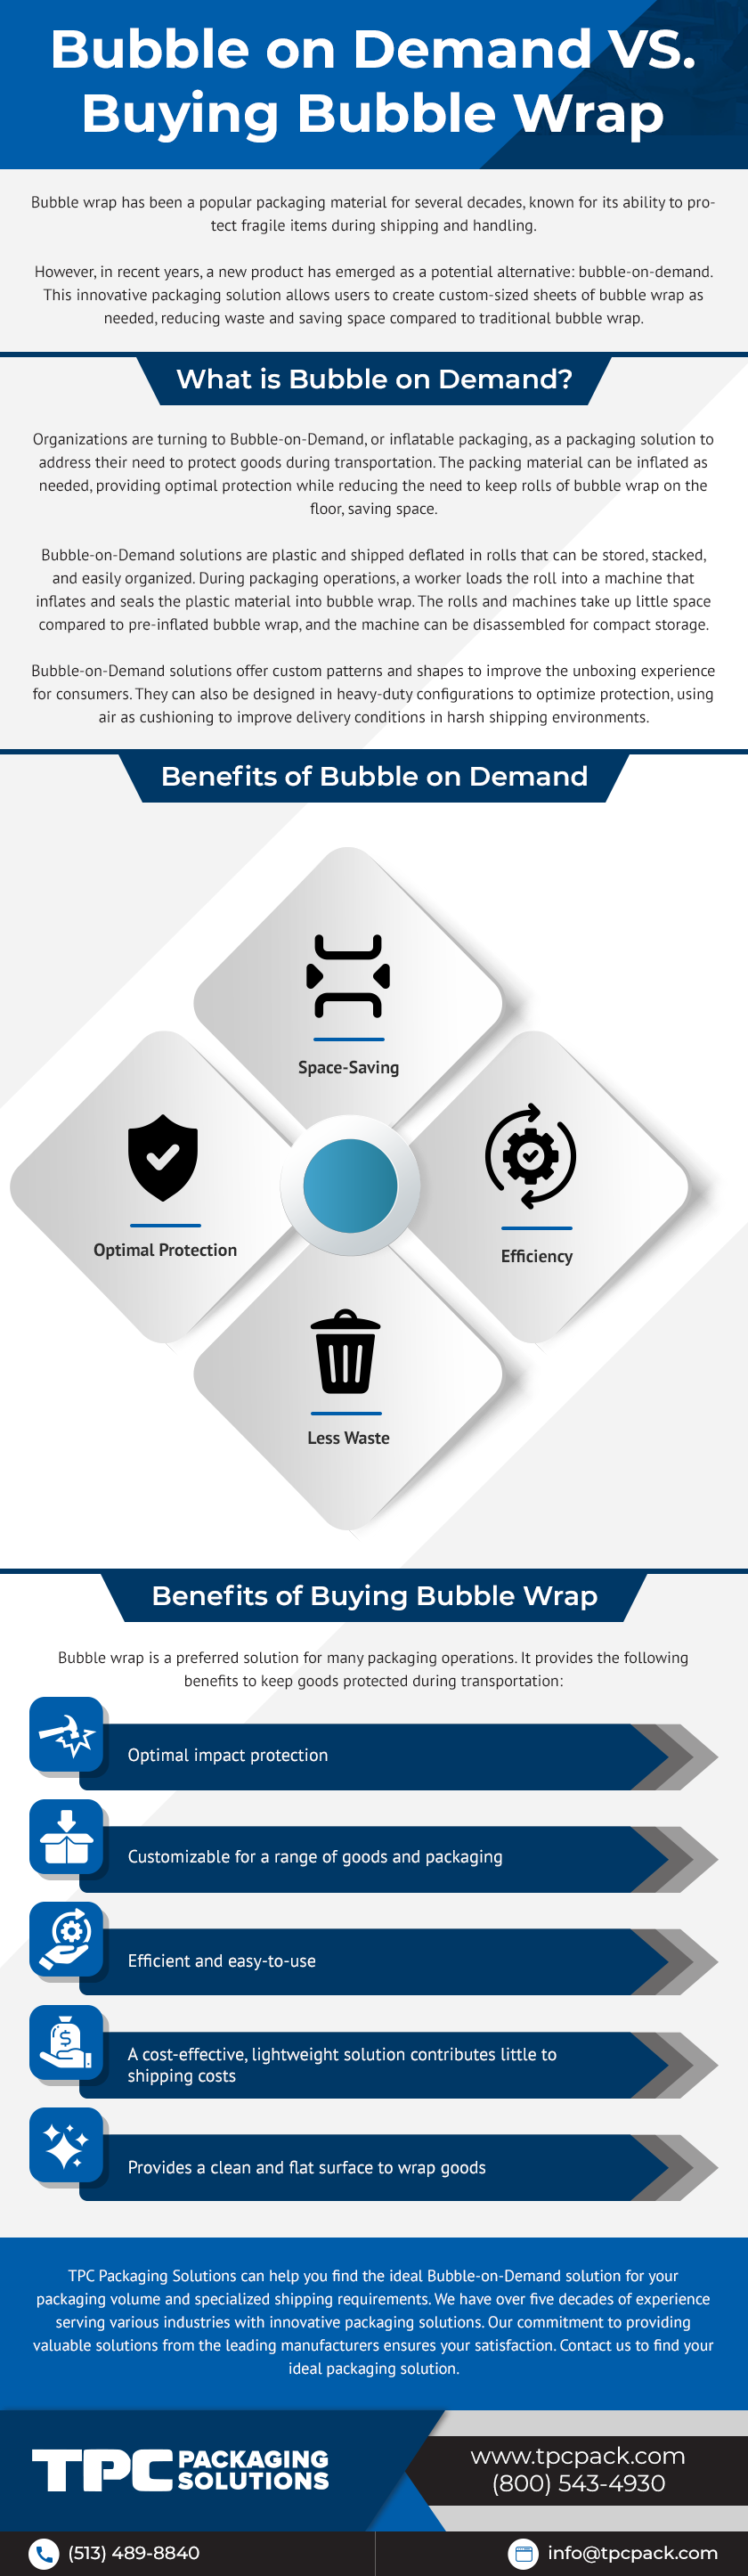 Bubble on Demand vs Buying Bubble Wrap